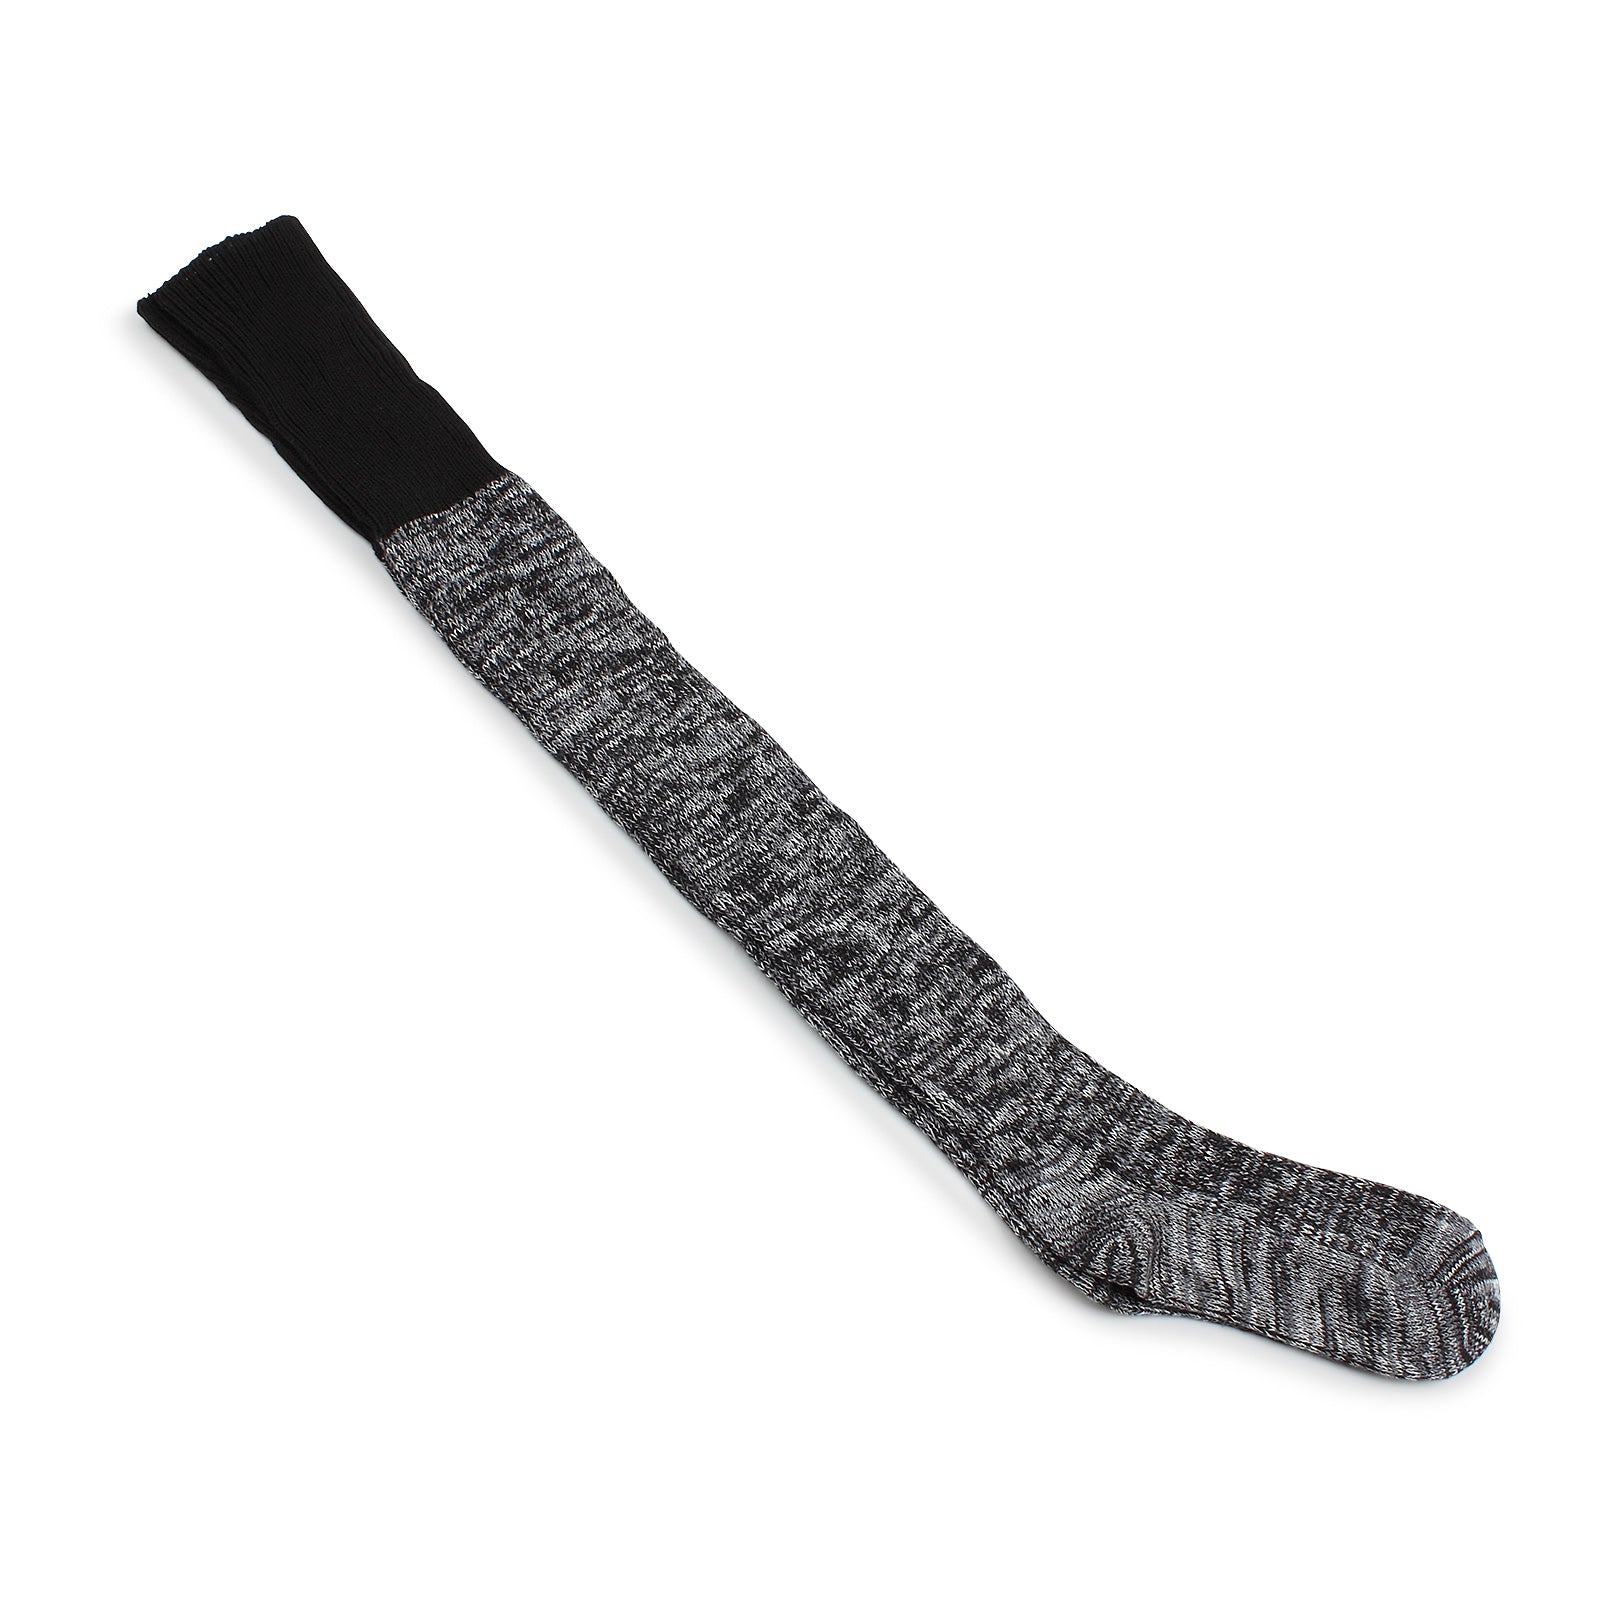 Gradien Knee High Socks High Quality Cotton Socks TO 15 - intypesocks